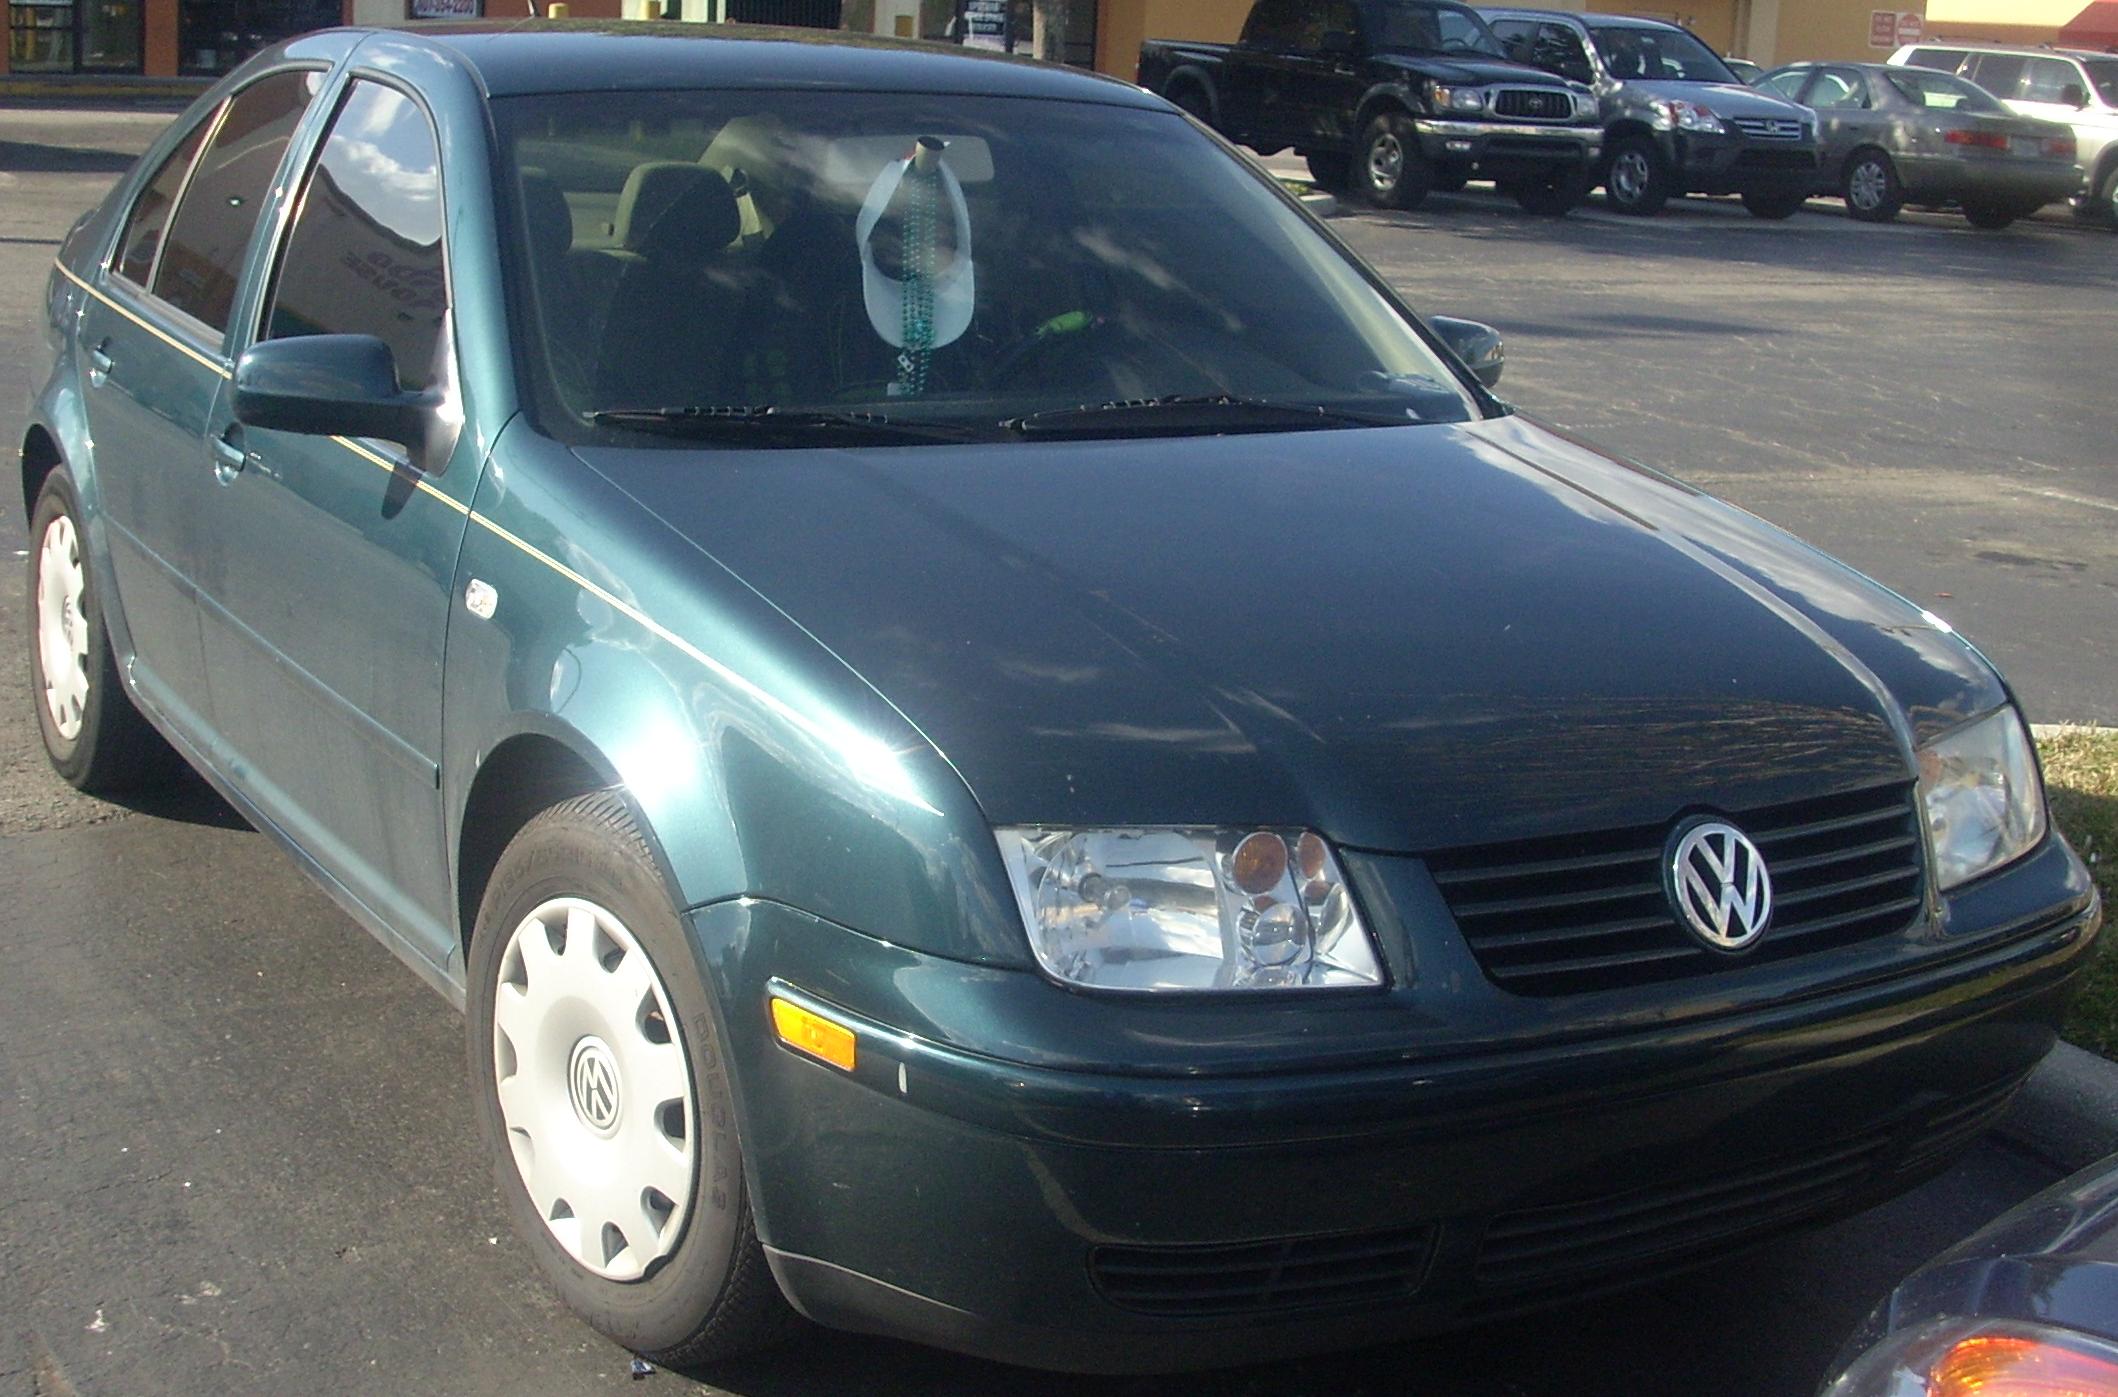 File:1999-2001 Volkswagen Jetta Sedan.JPG - Wikimedia Commons